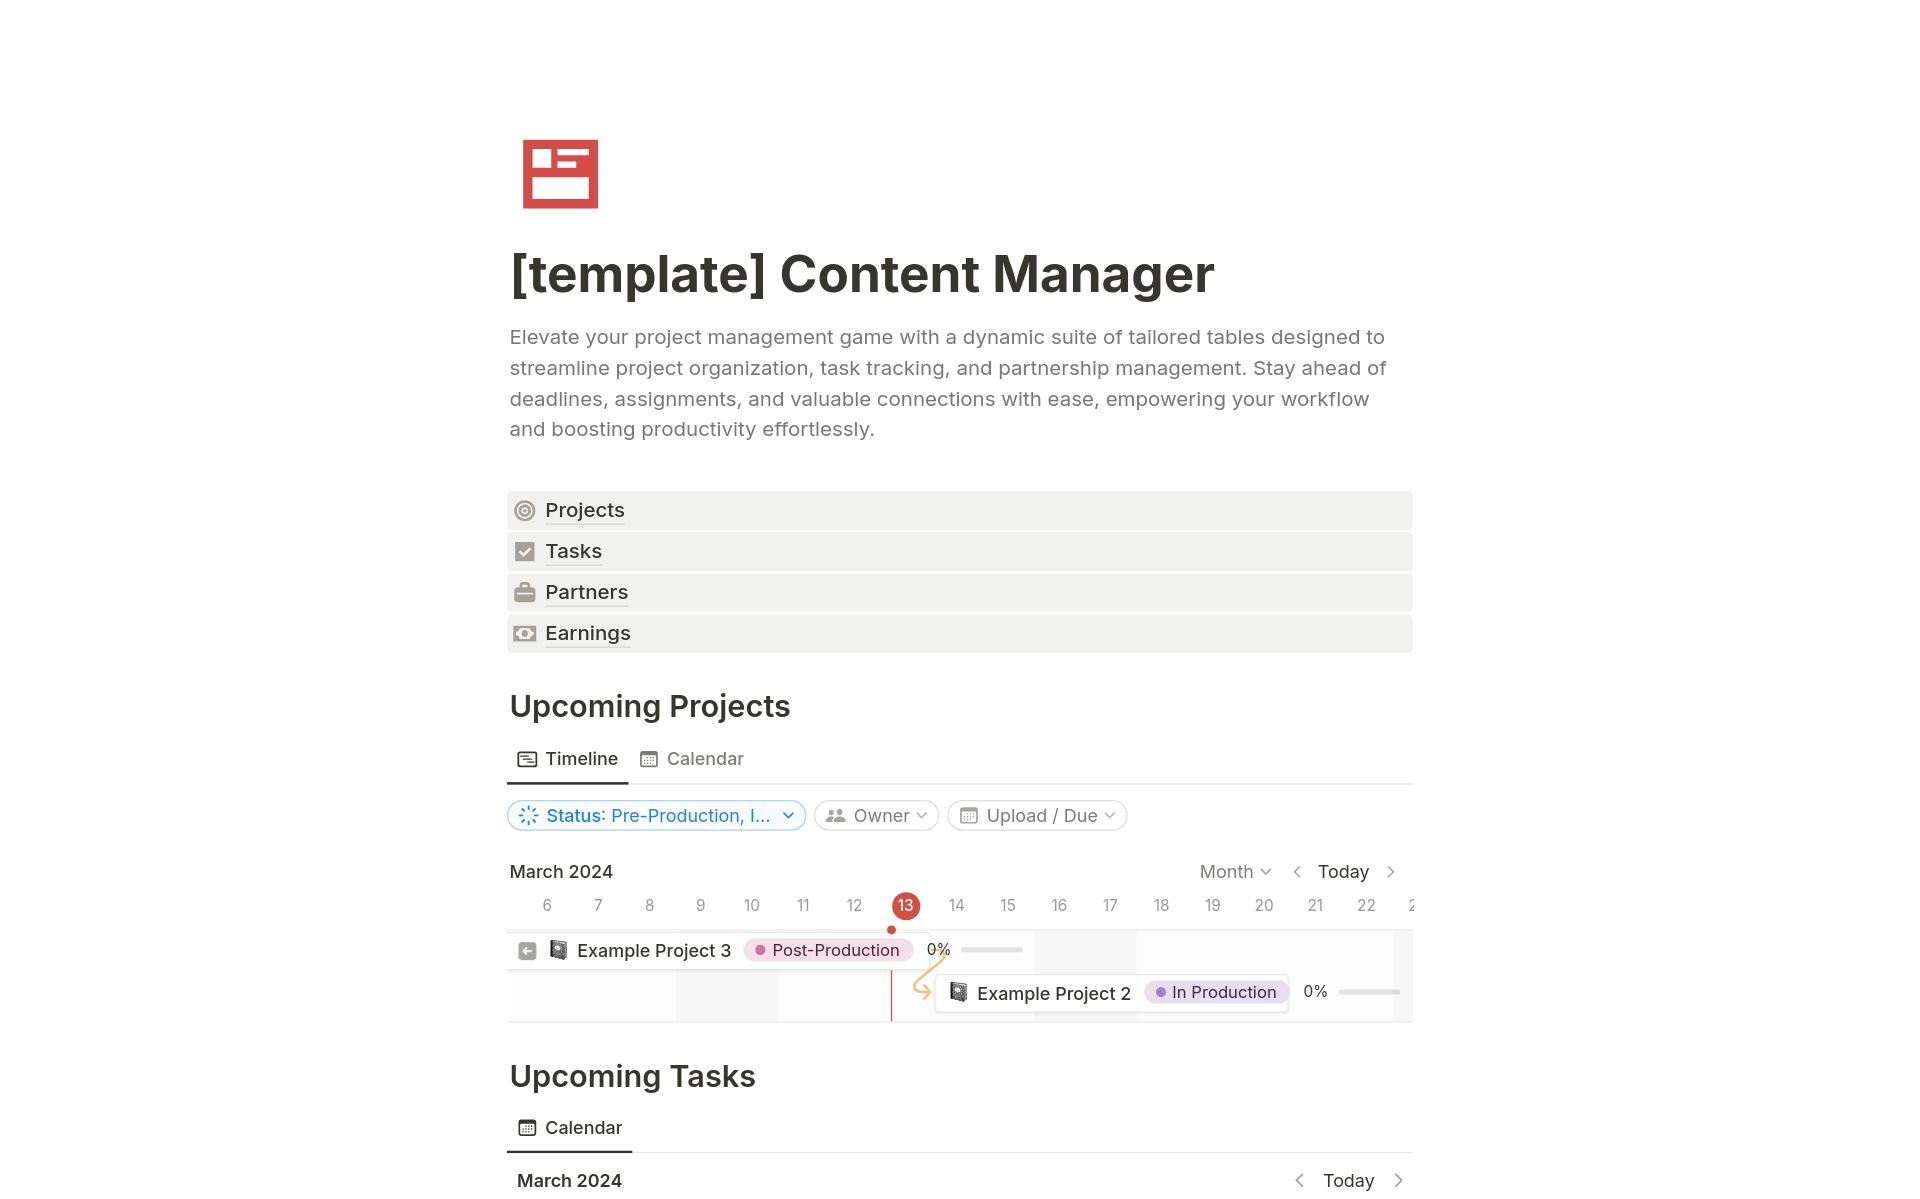 Vista previa de plantilla para Content Manager